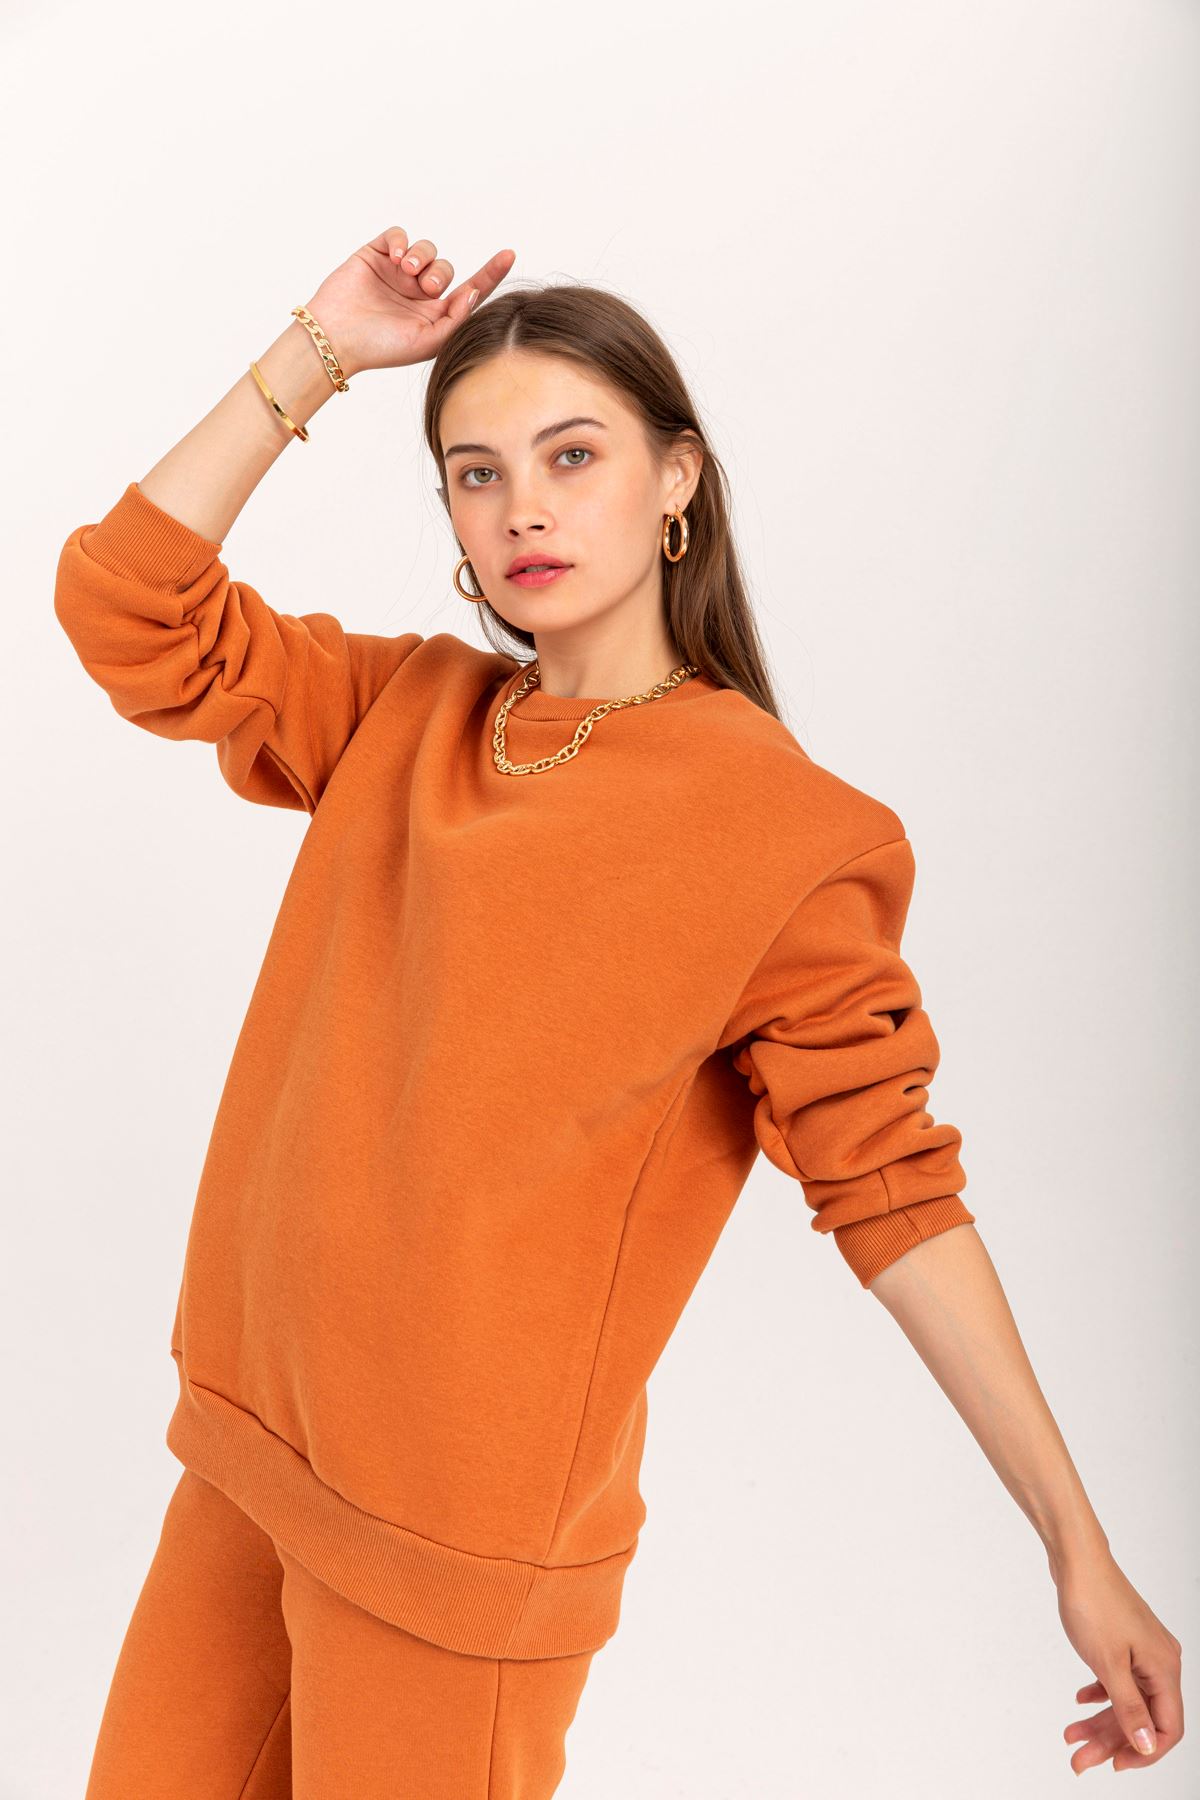 Third Knit With Wool İnside Fabric Long Sleeve Below Hip Women Sweatshirt - Cinnamon 